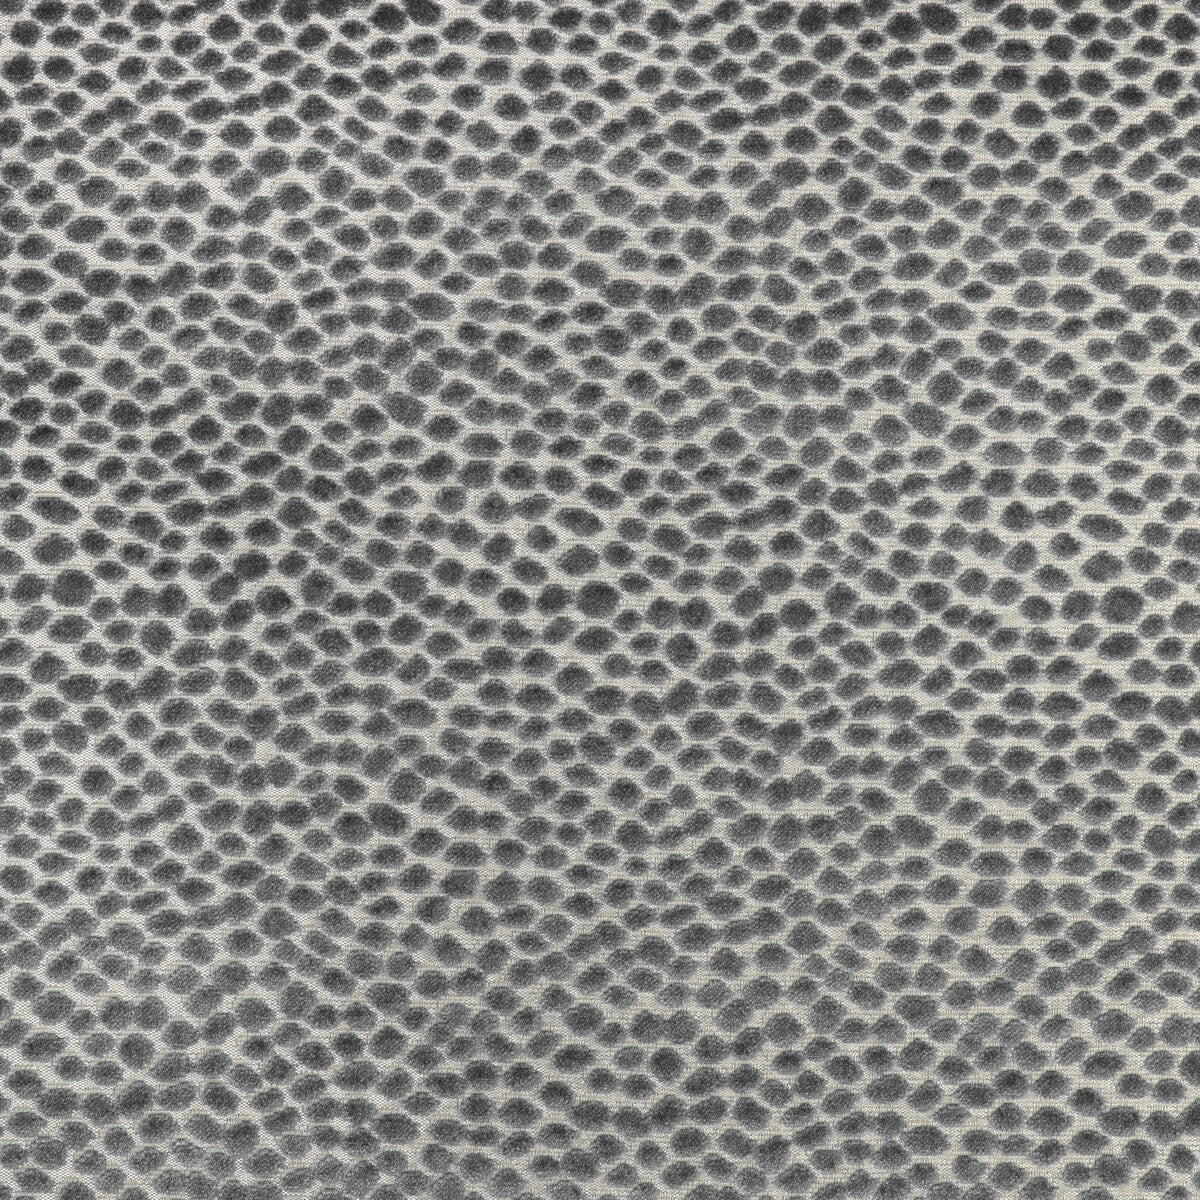 Kravet Design fabric in 37087-11 color - pattern 37087.11.0 - by Kravet Design in the Modern Velvets collection